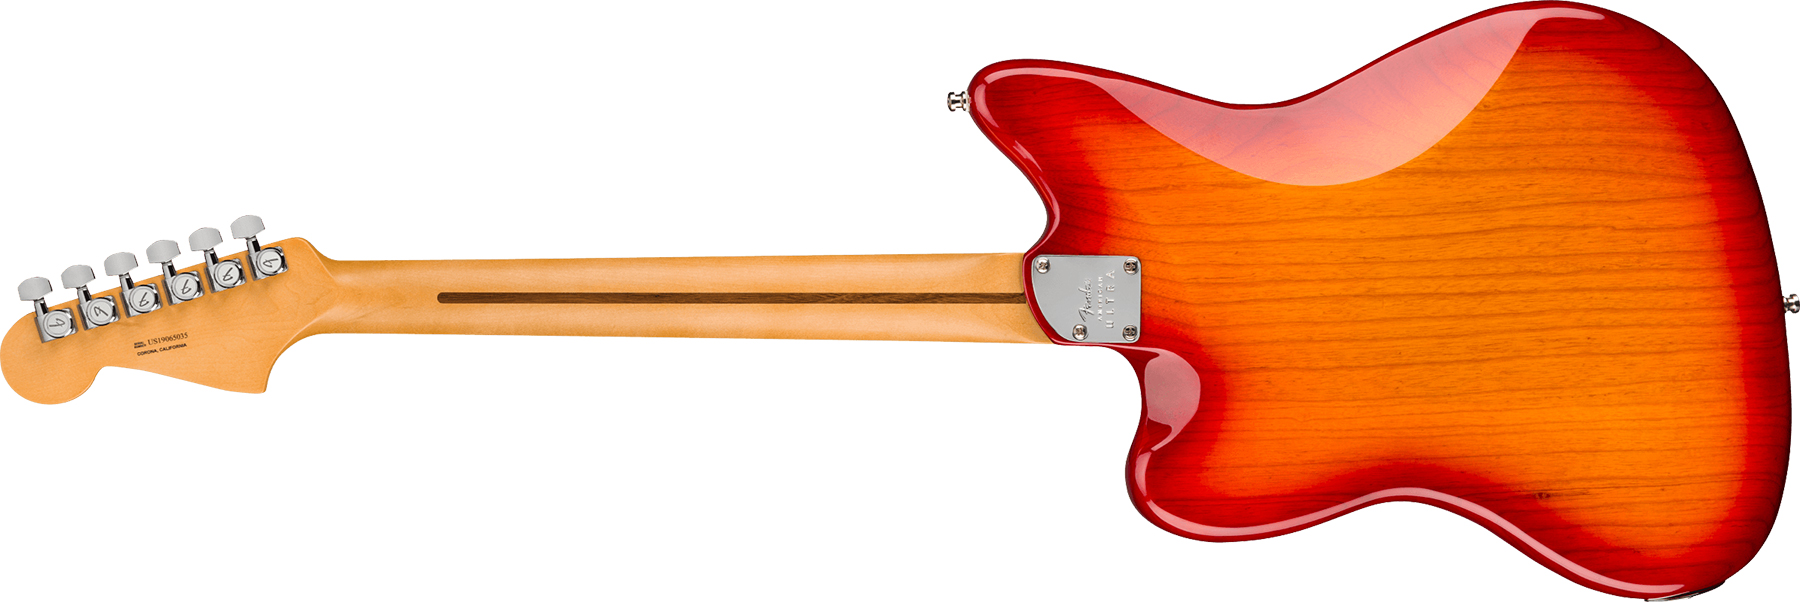 Fender Jazzmaster American Ultra 2019 Usa Mn - Plasma Red Burst - Retro rock electric guitar - Variation 1